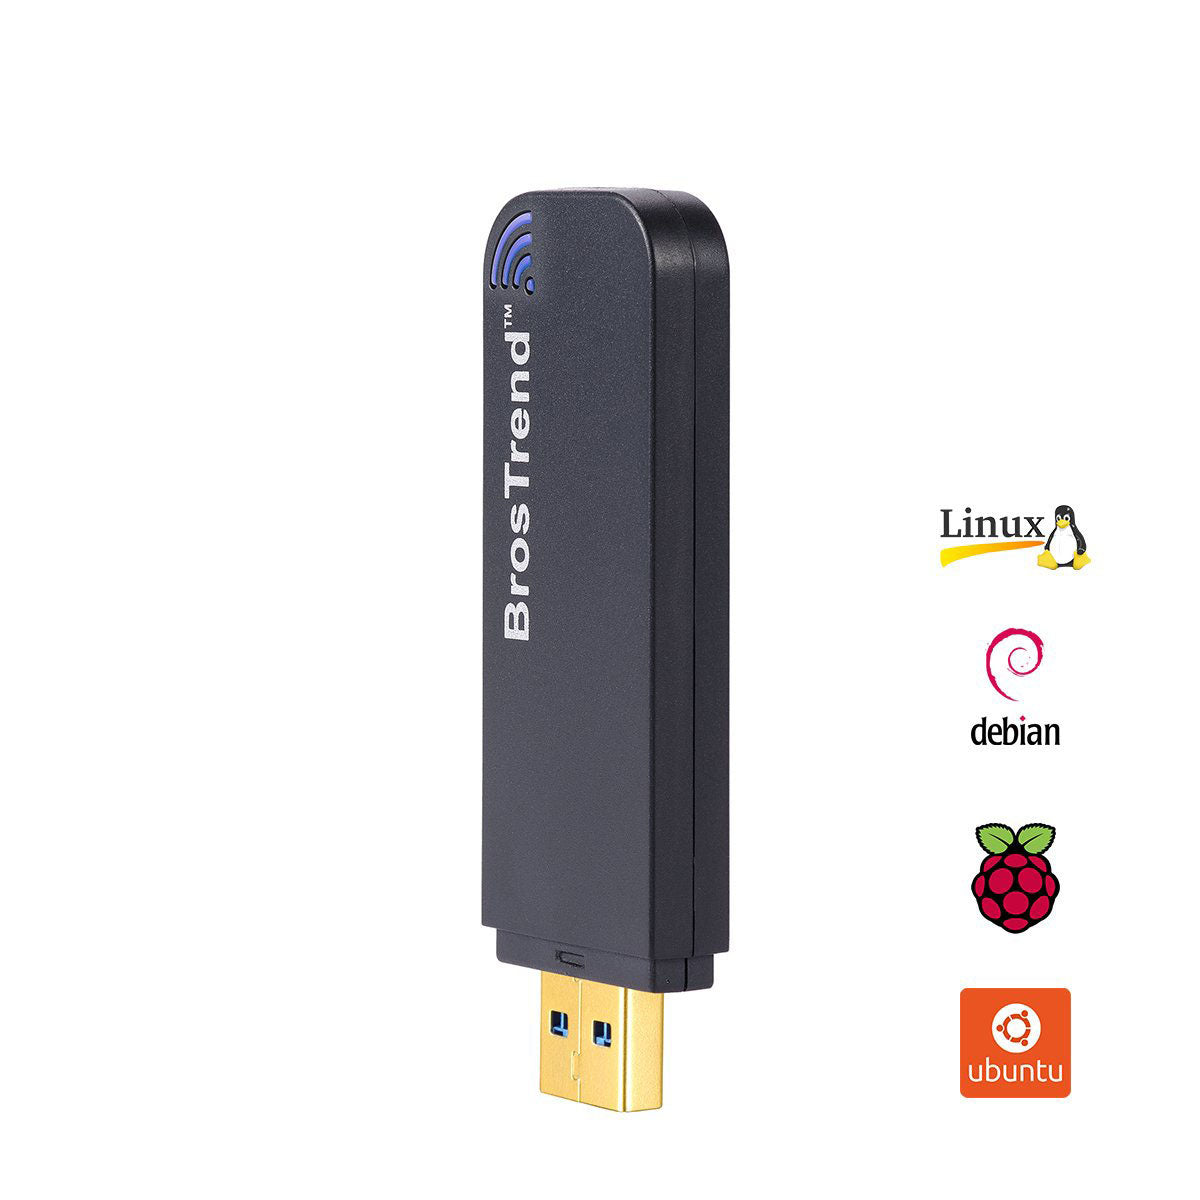 BrosTrend Linux wireless adapter